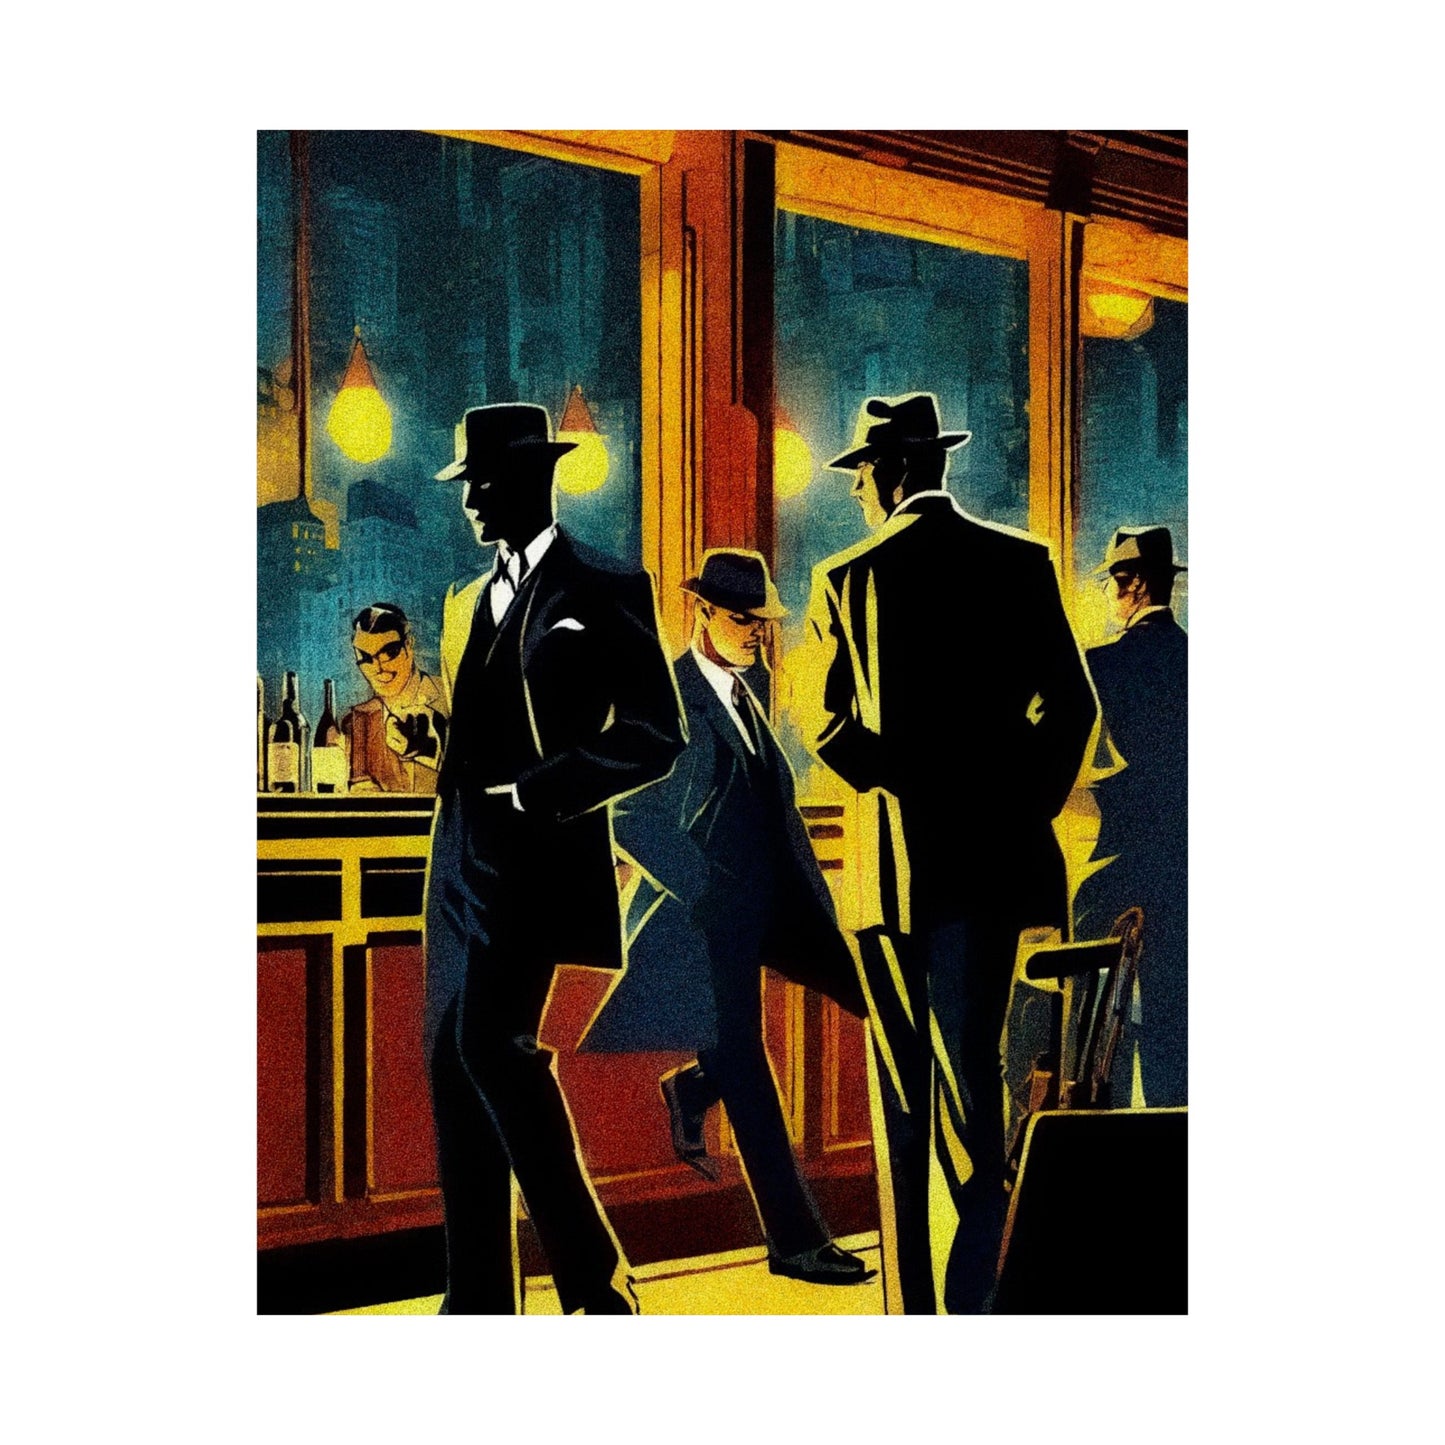 The Gentleman's Club Poster